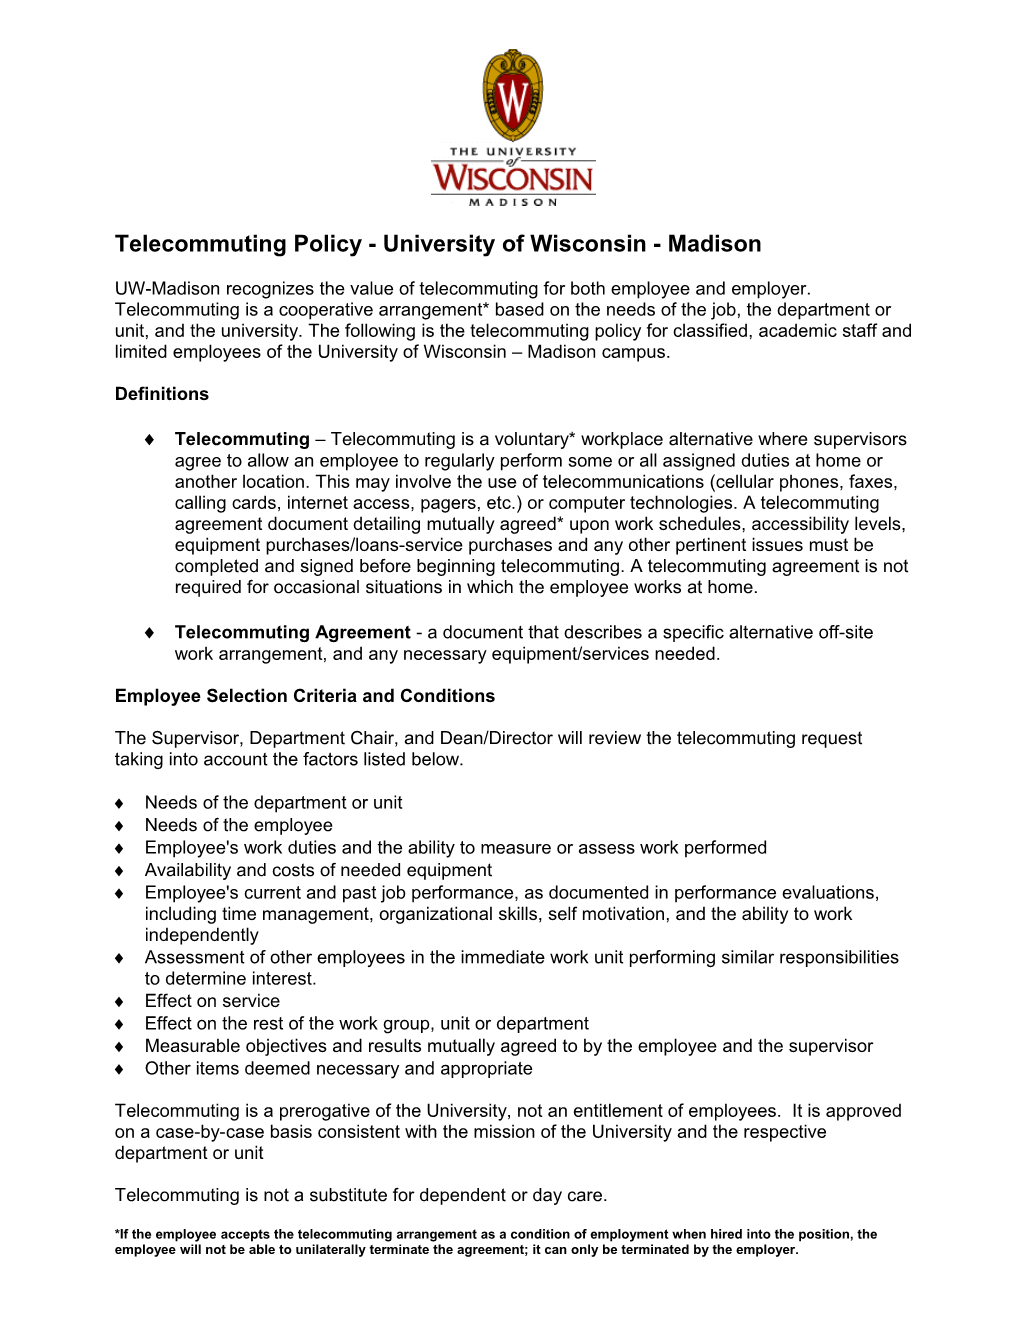 Telecommuting Policy -University of Wisconsin - Madison